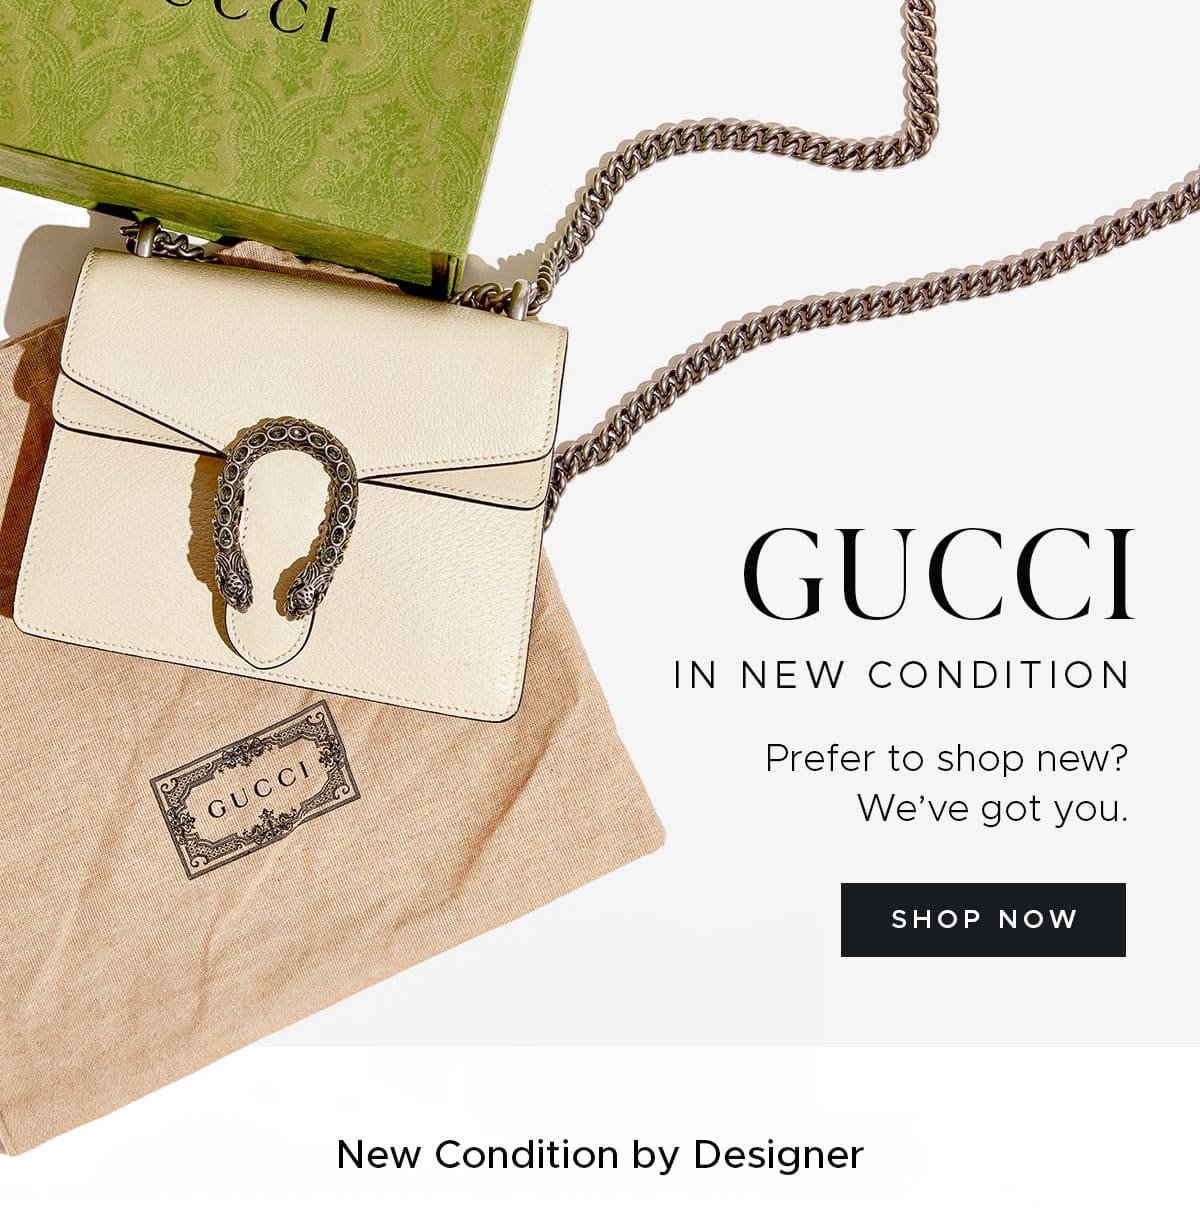 Gucci in NEW Condition